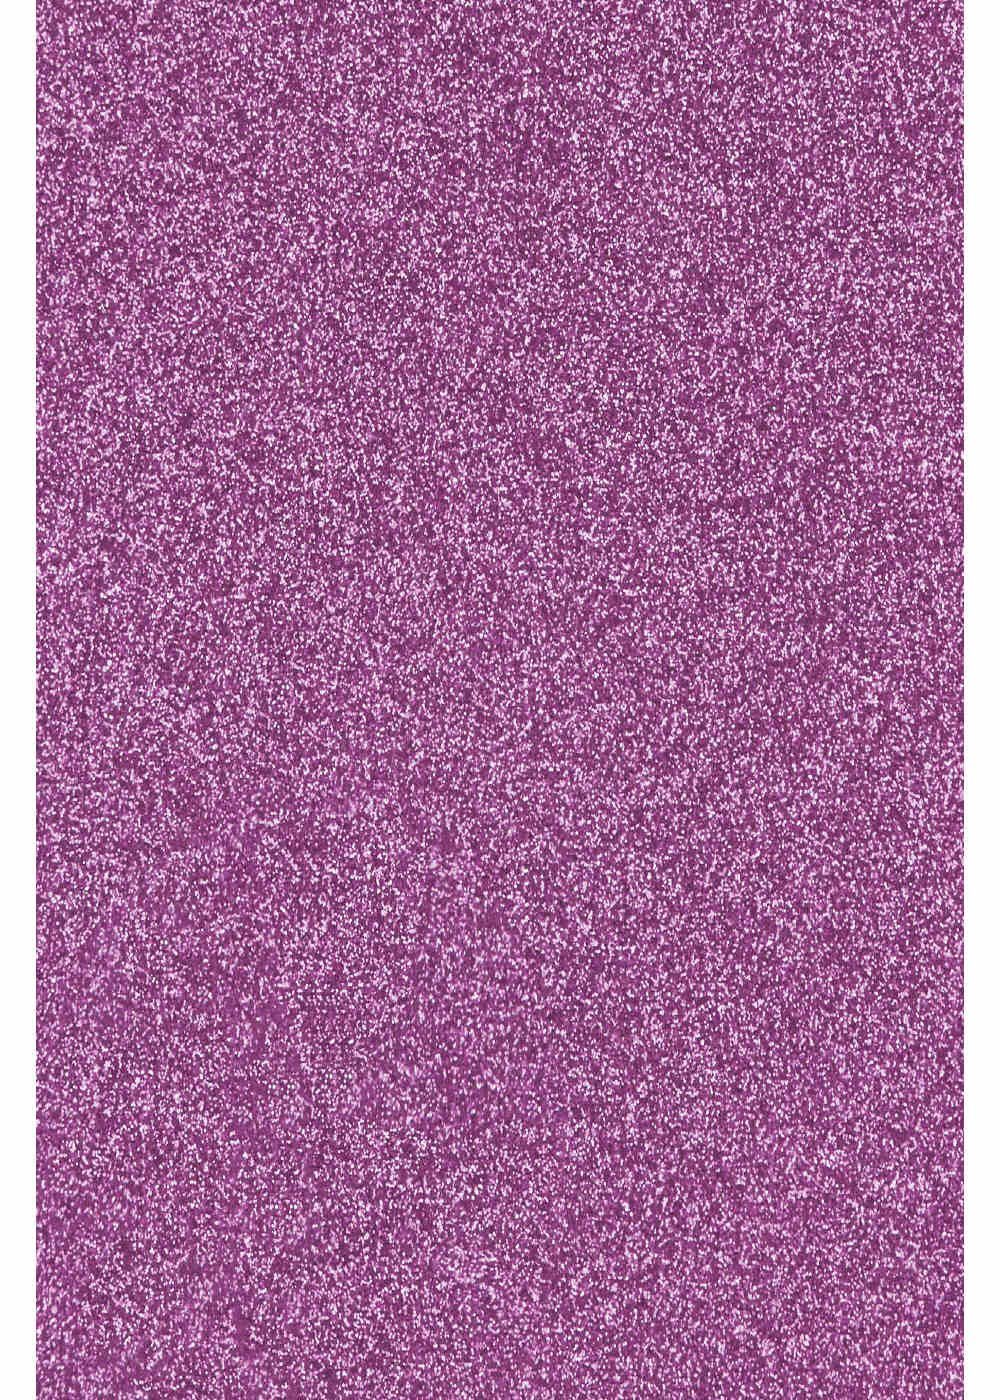 Hilltop Transparentpapier Glitzer Transferfolie/Textilfolie zum Aufbügeln, perfekt zum Plottern Lavender